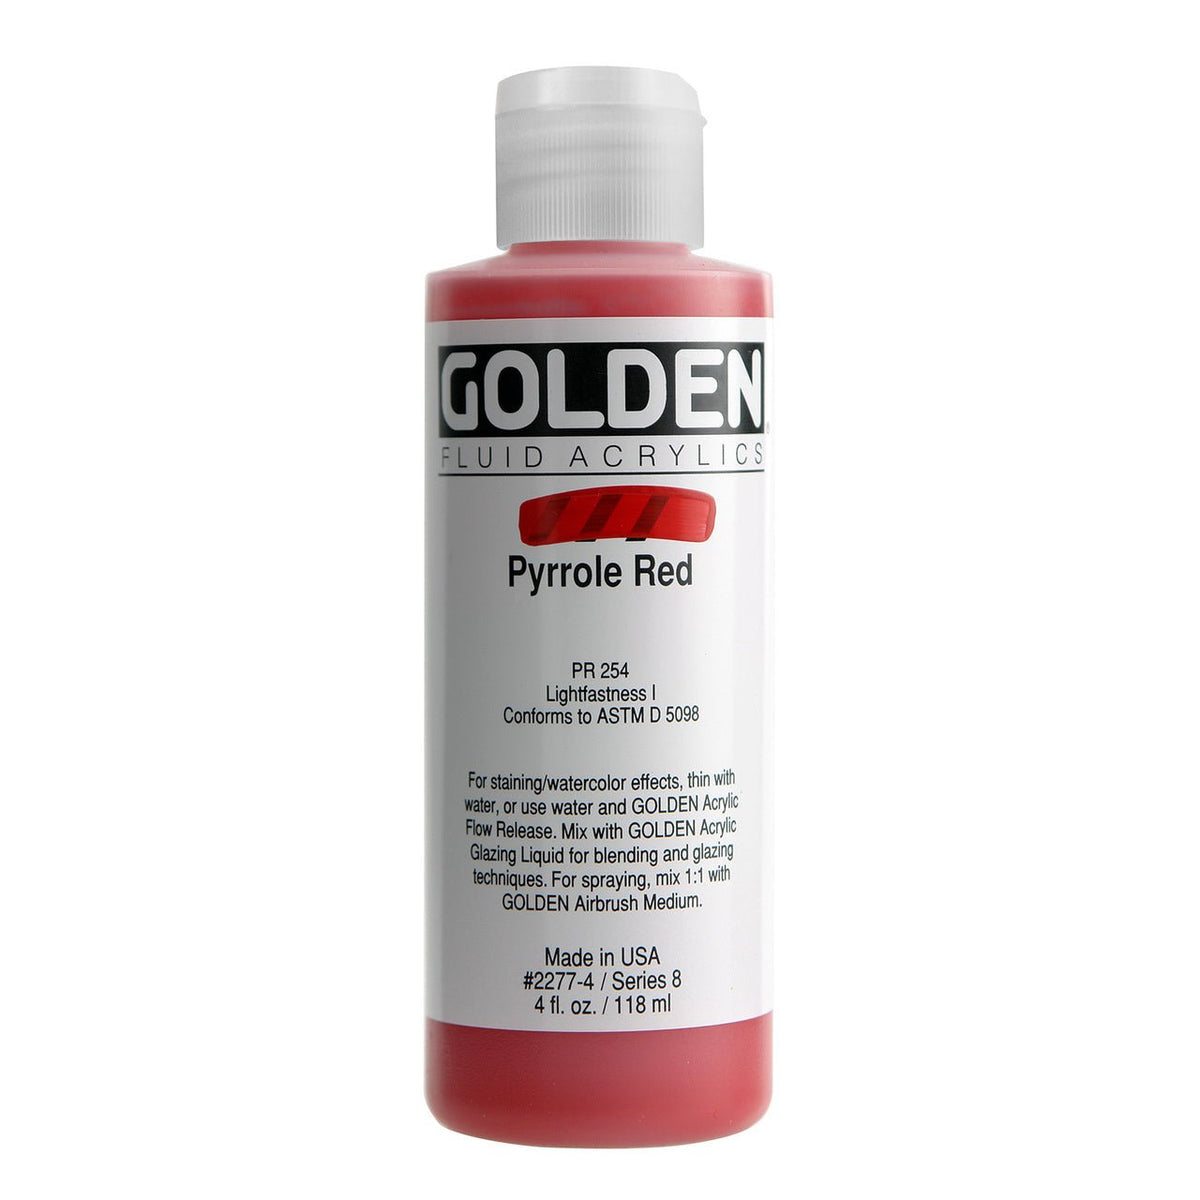 Golden Fluid Acrylic Pyrrole Red 4 oz - merriartist.com